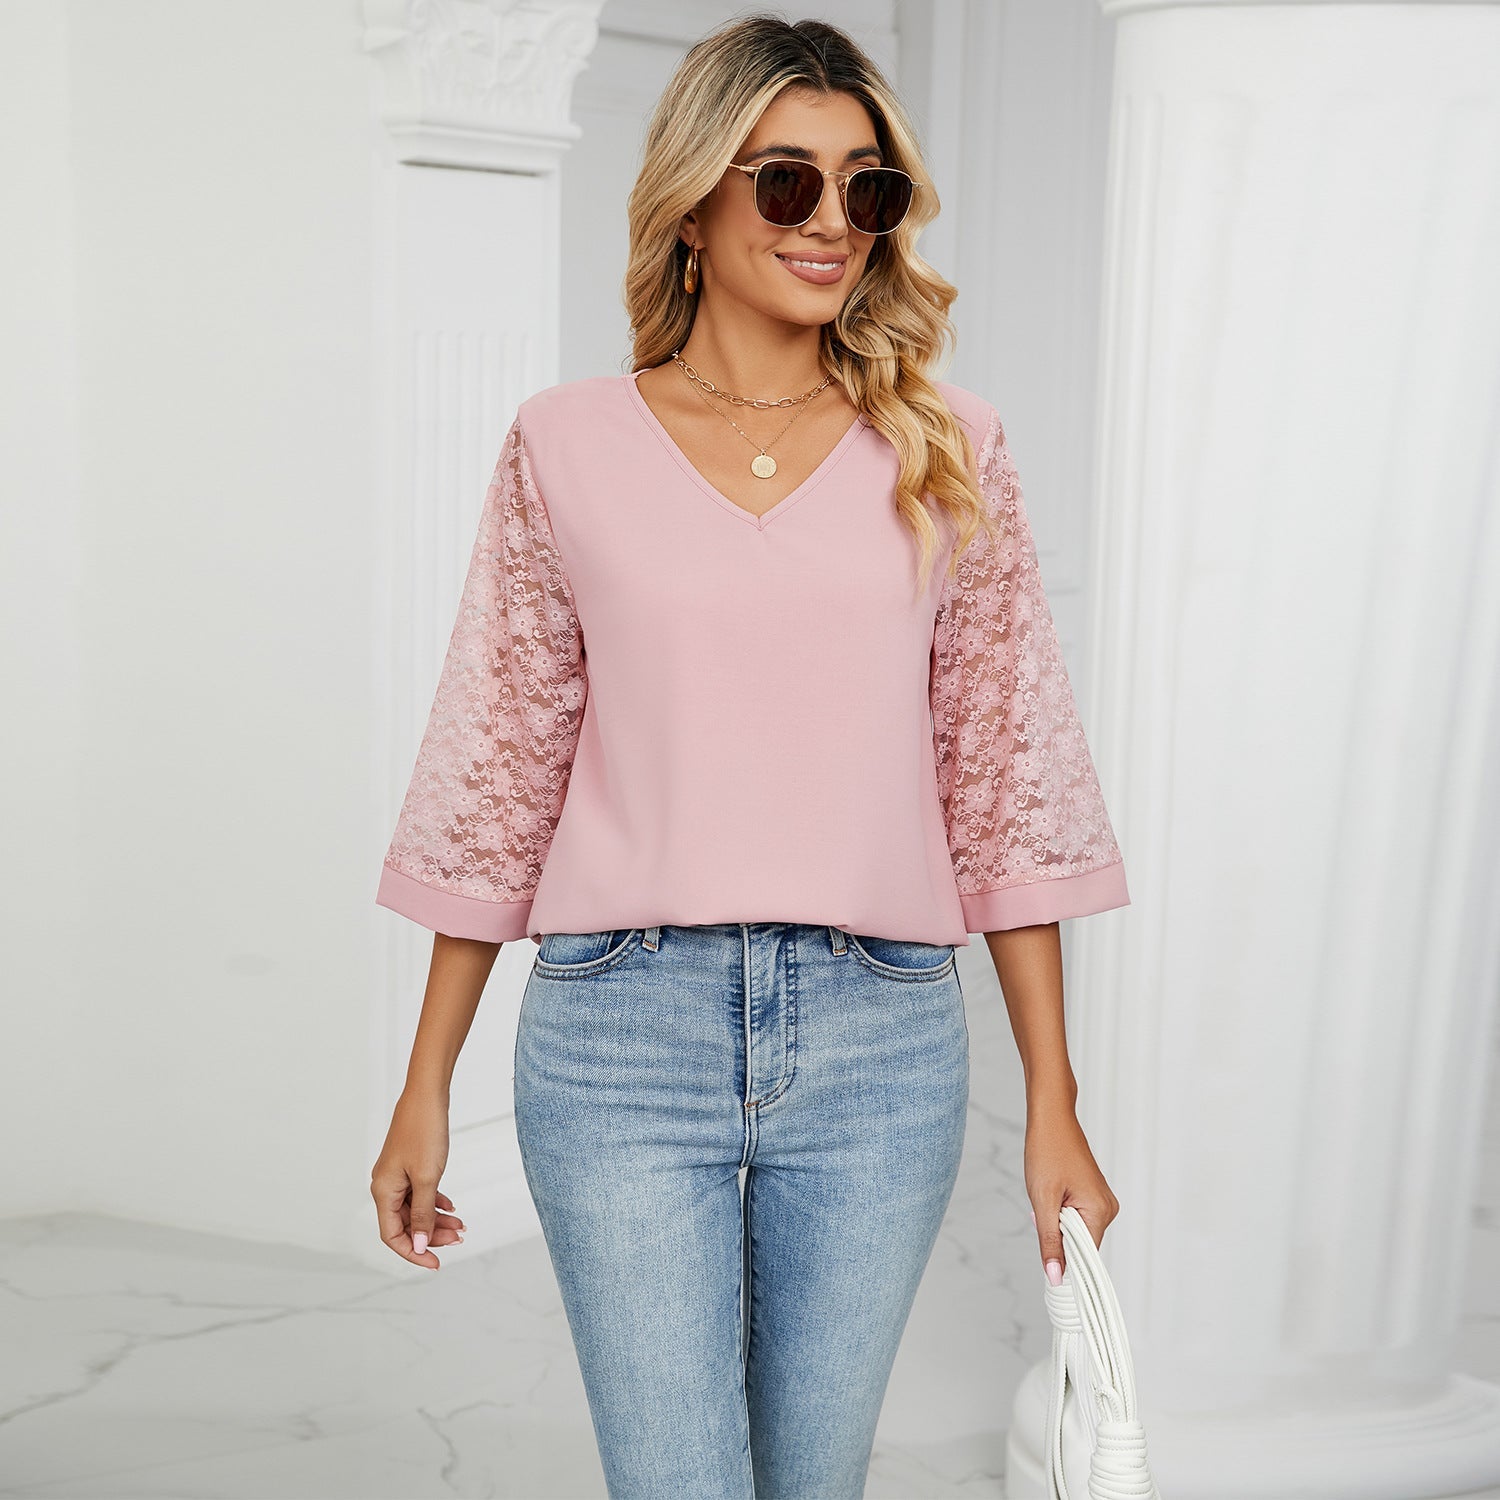 Fashion Summer Chiffon 3/4 Sleeves Women Blouses-Shirts & Tops-Pink-S-Free Shipping Leatheretro